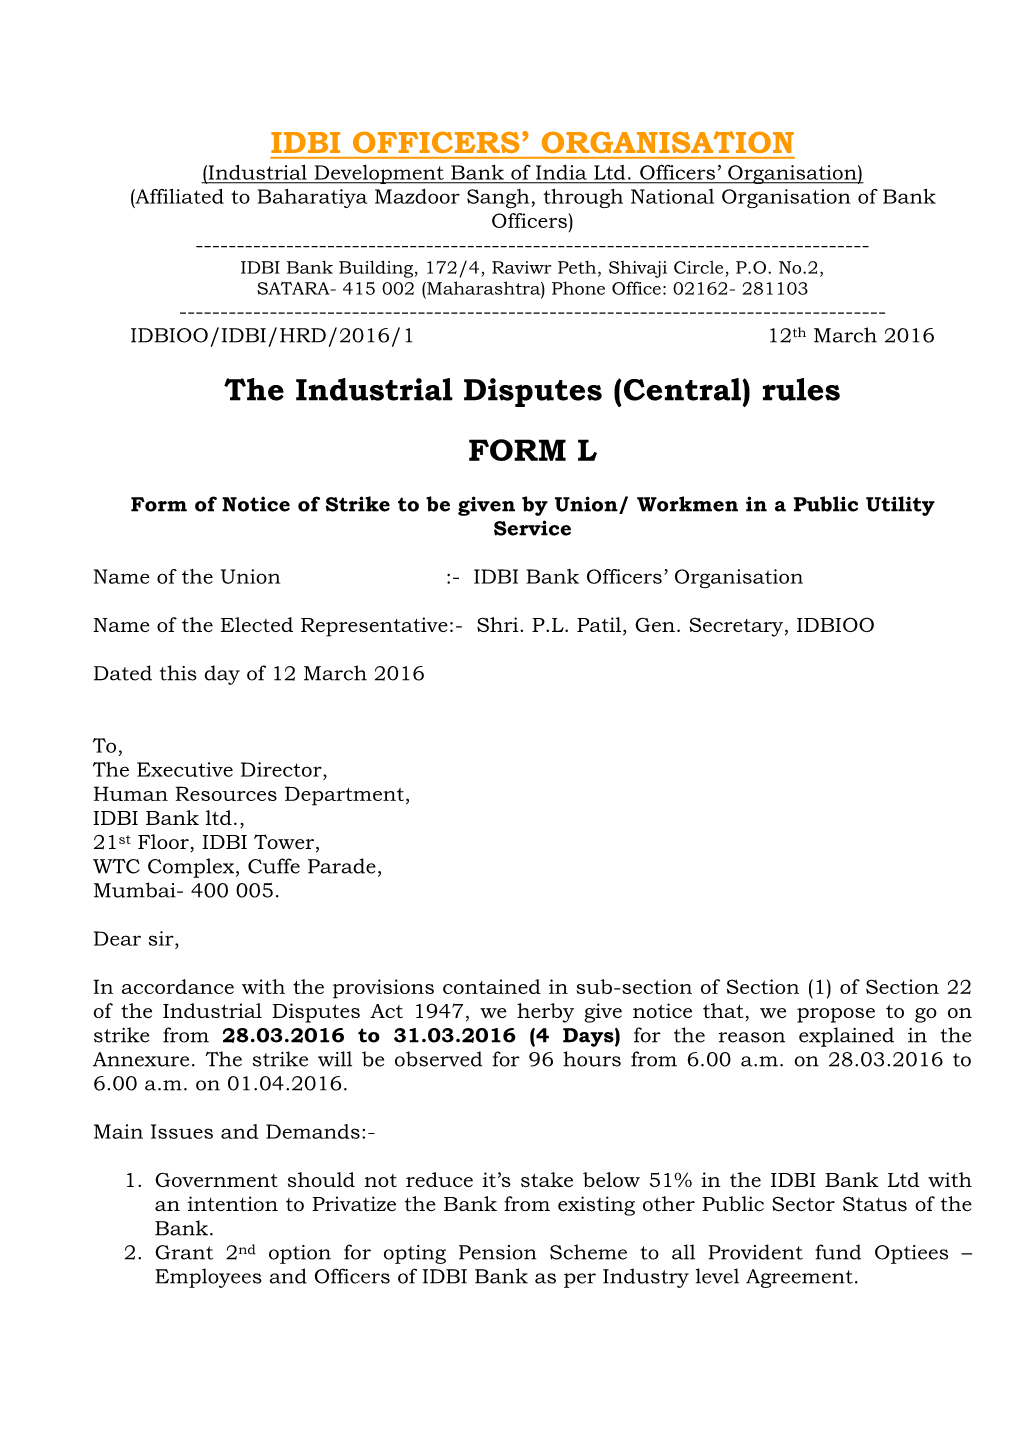 IDBI OFFICERS' ORGANISATION the Industrial Disputes